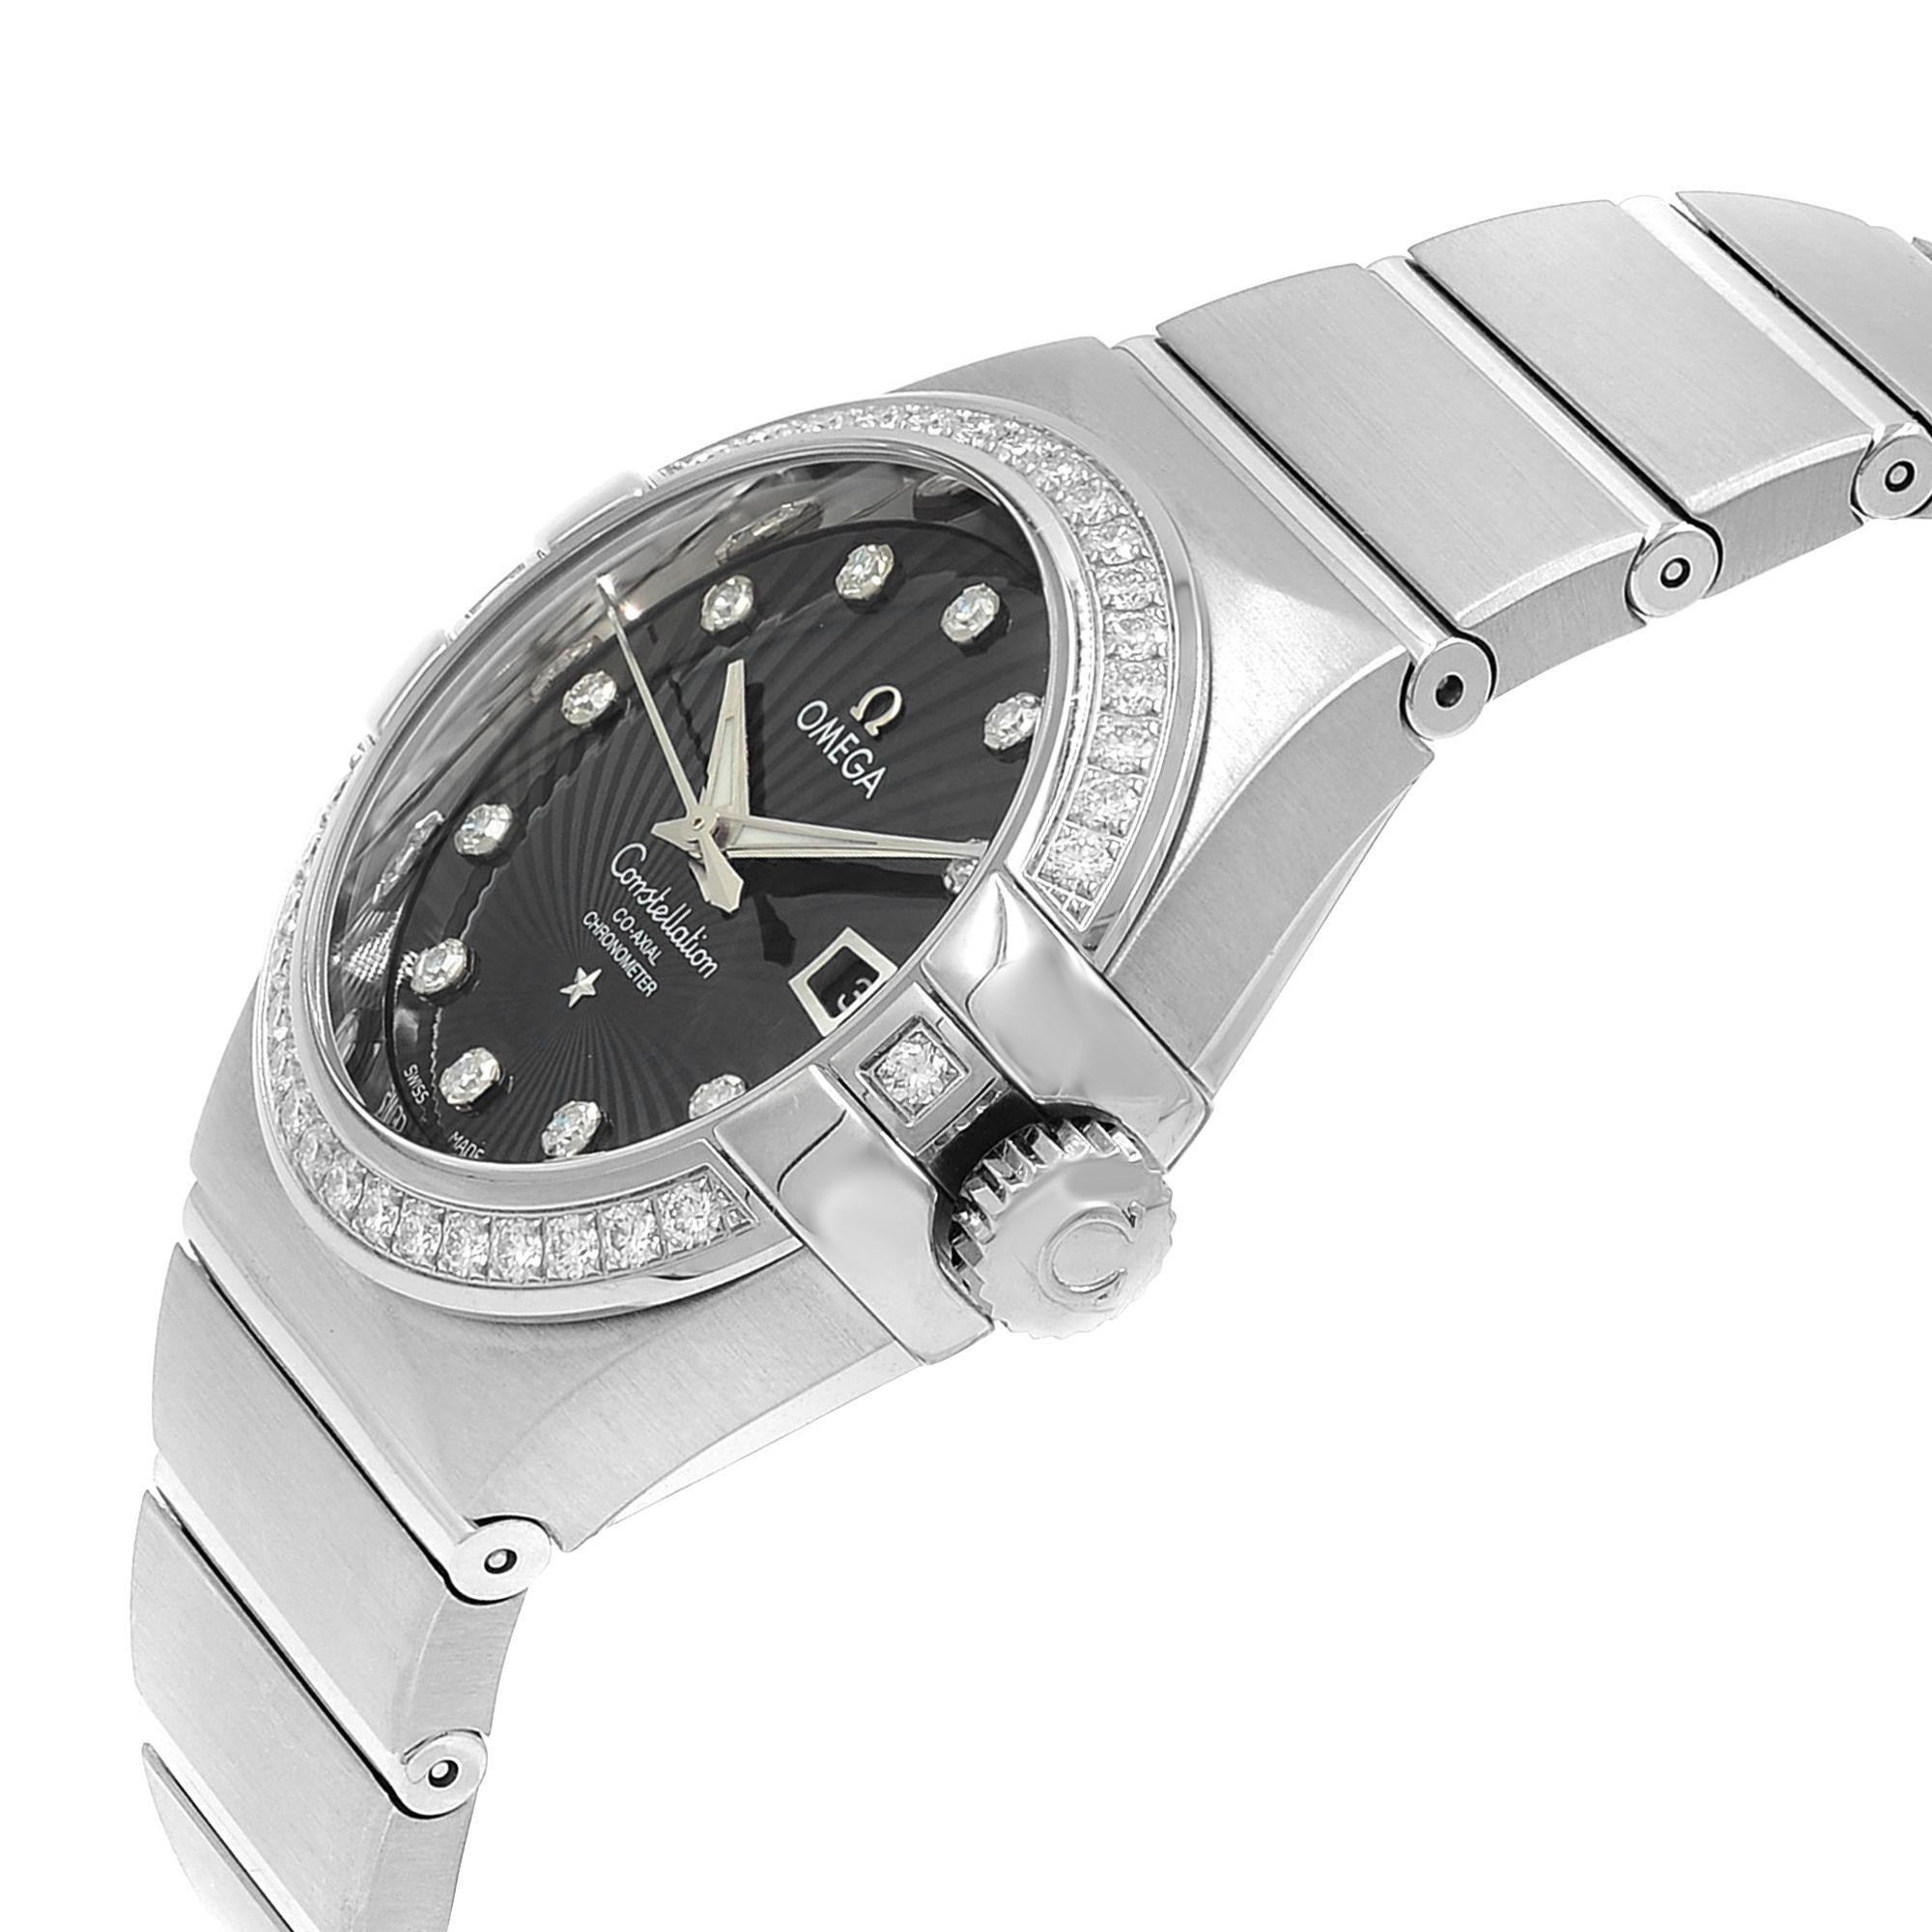 omega constellation diamond watch